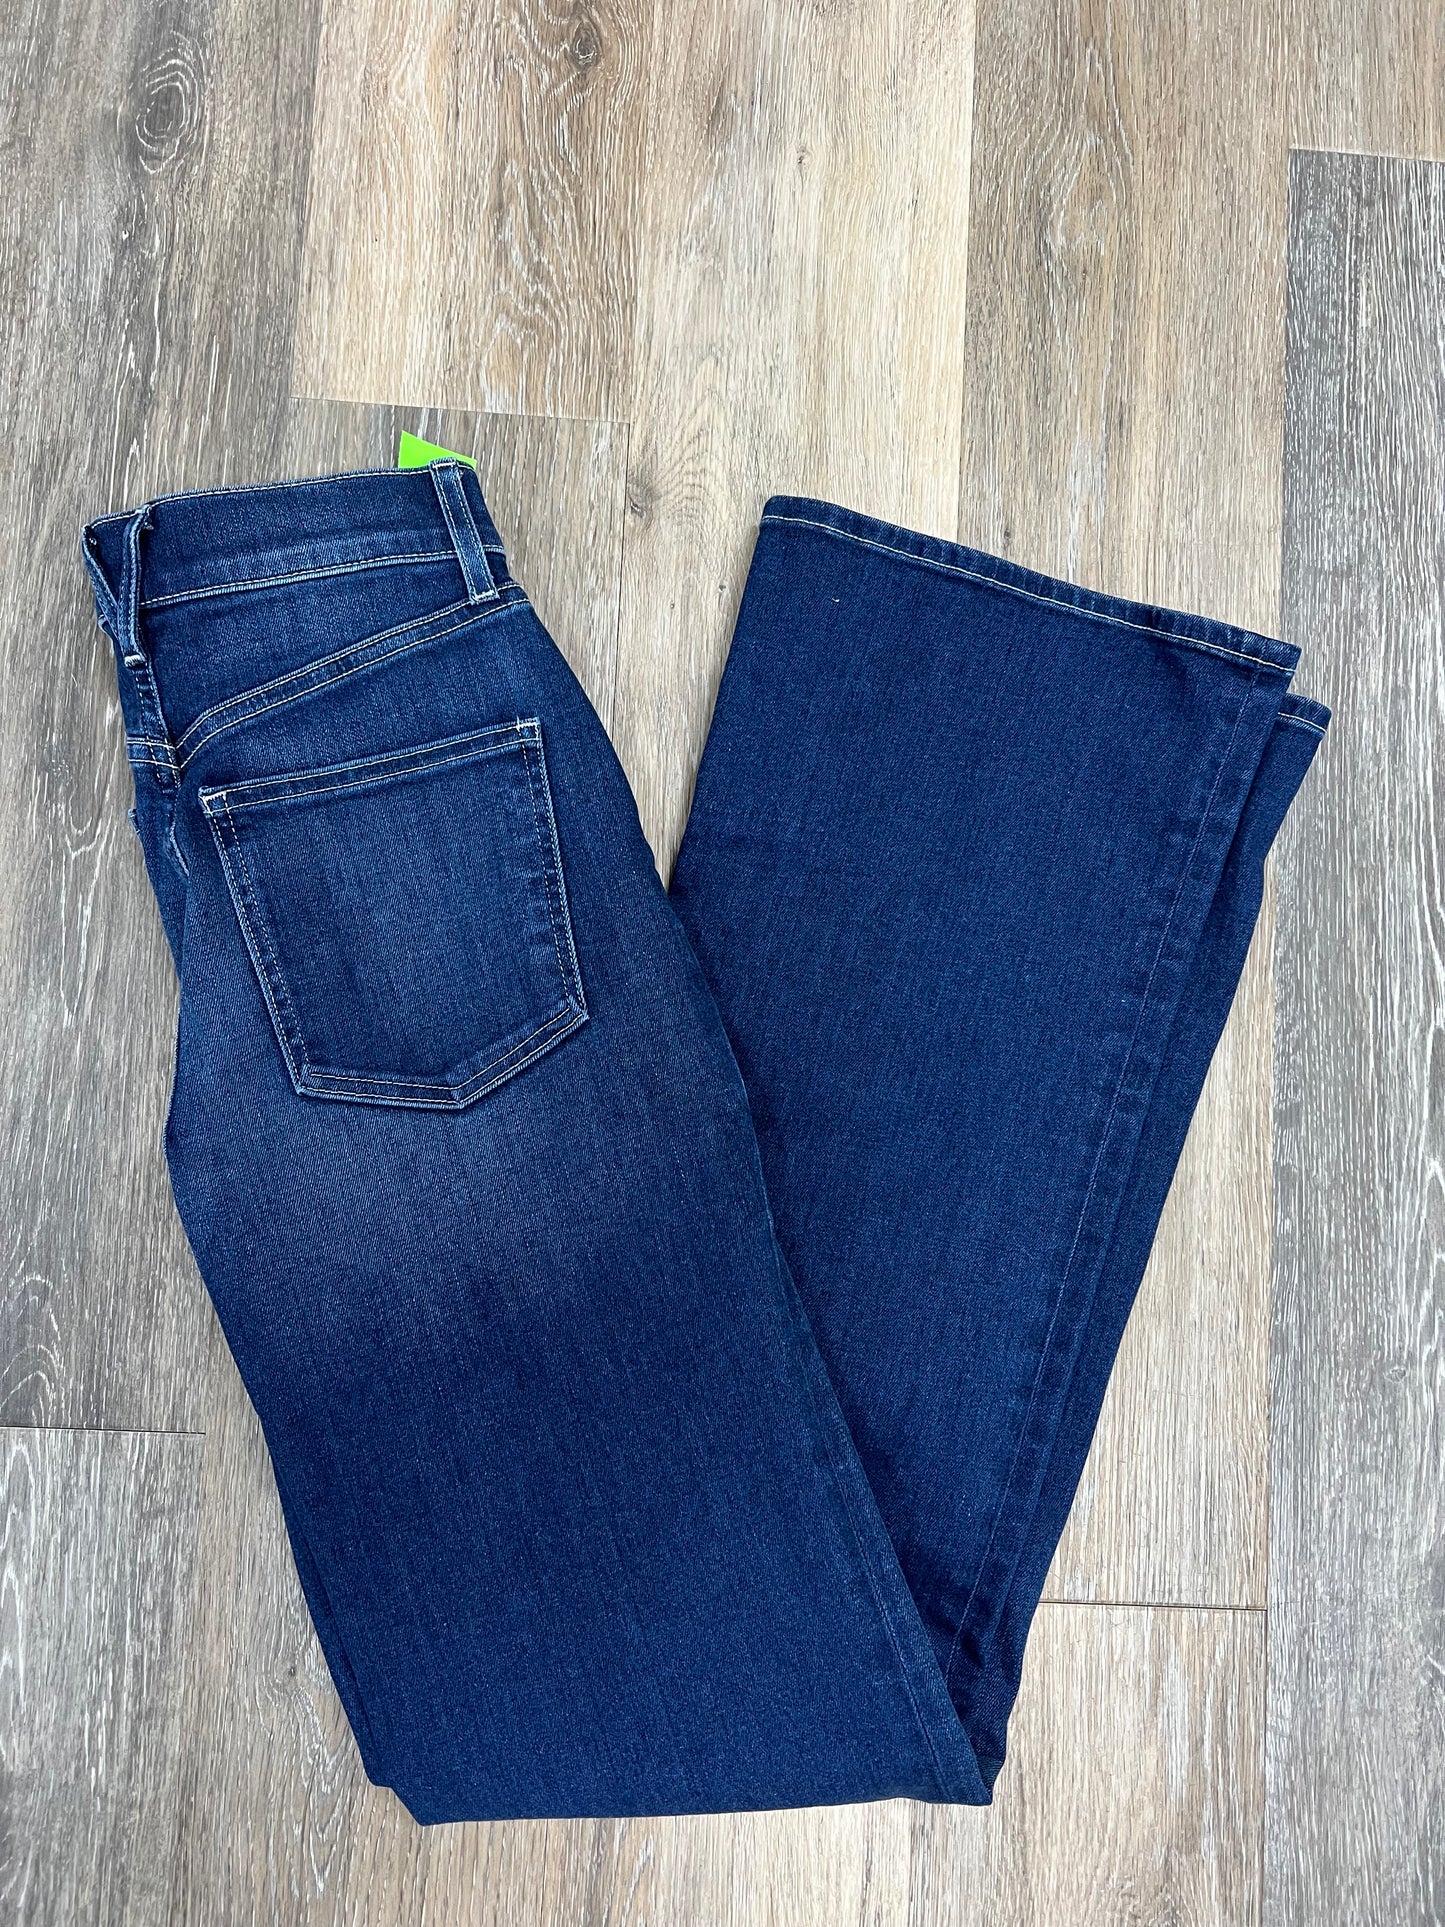 Jeans Designer By Veronica Beard  Size: 0/24